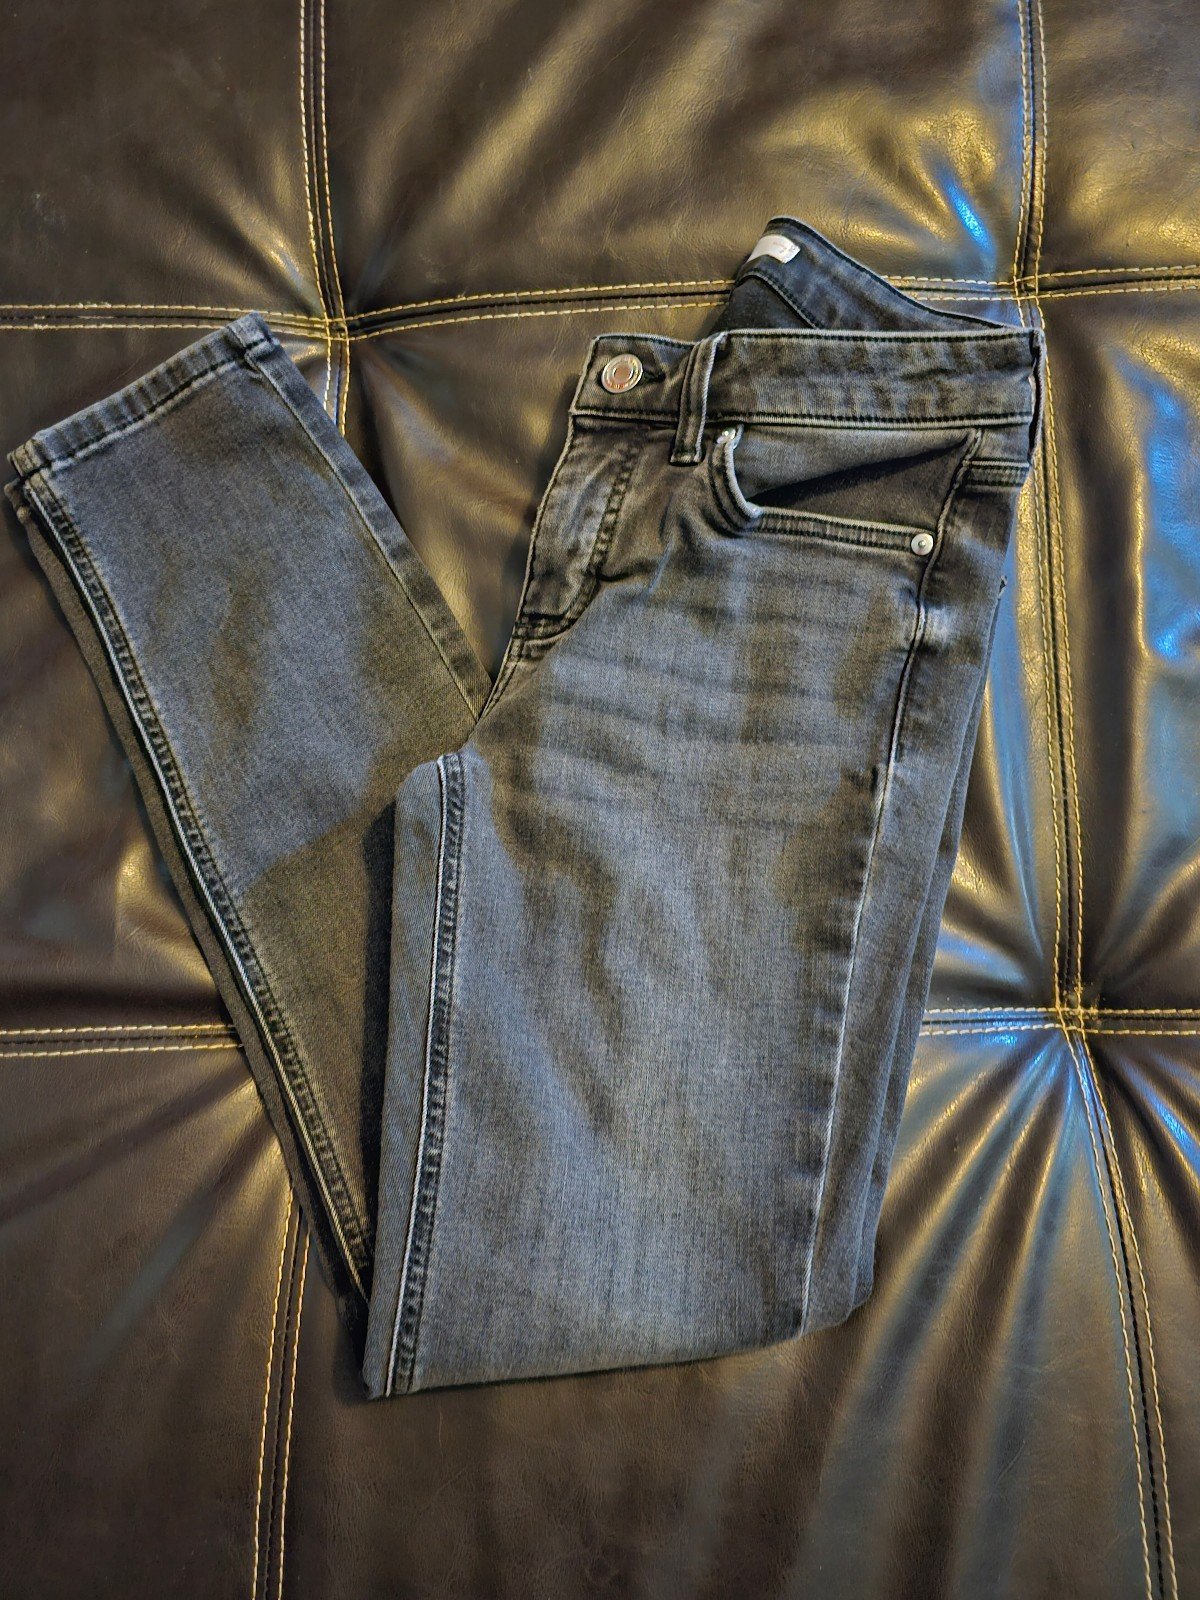 the Lowest price Lauren Conrad skinny jeans GRYzuvLwC F